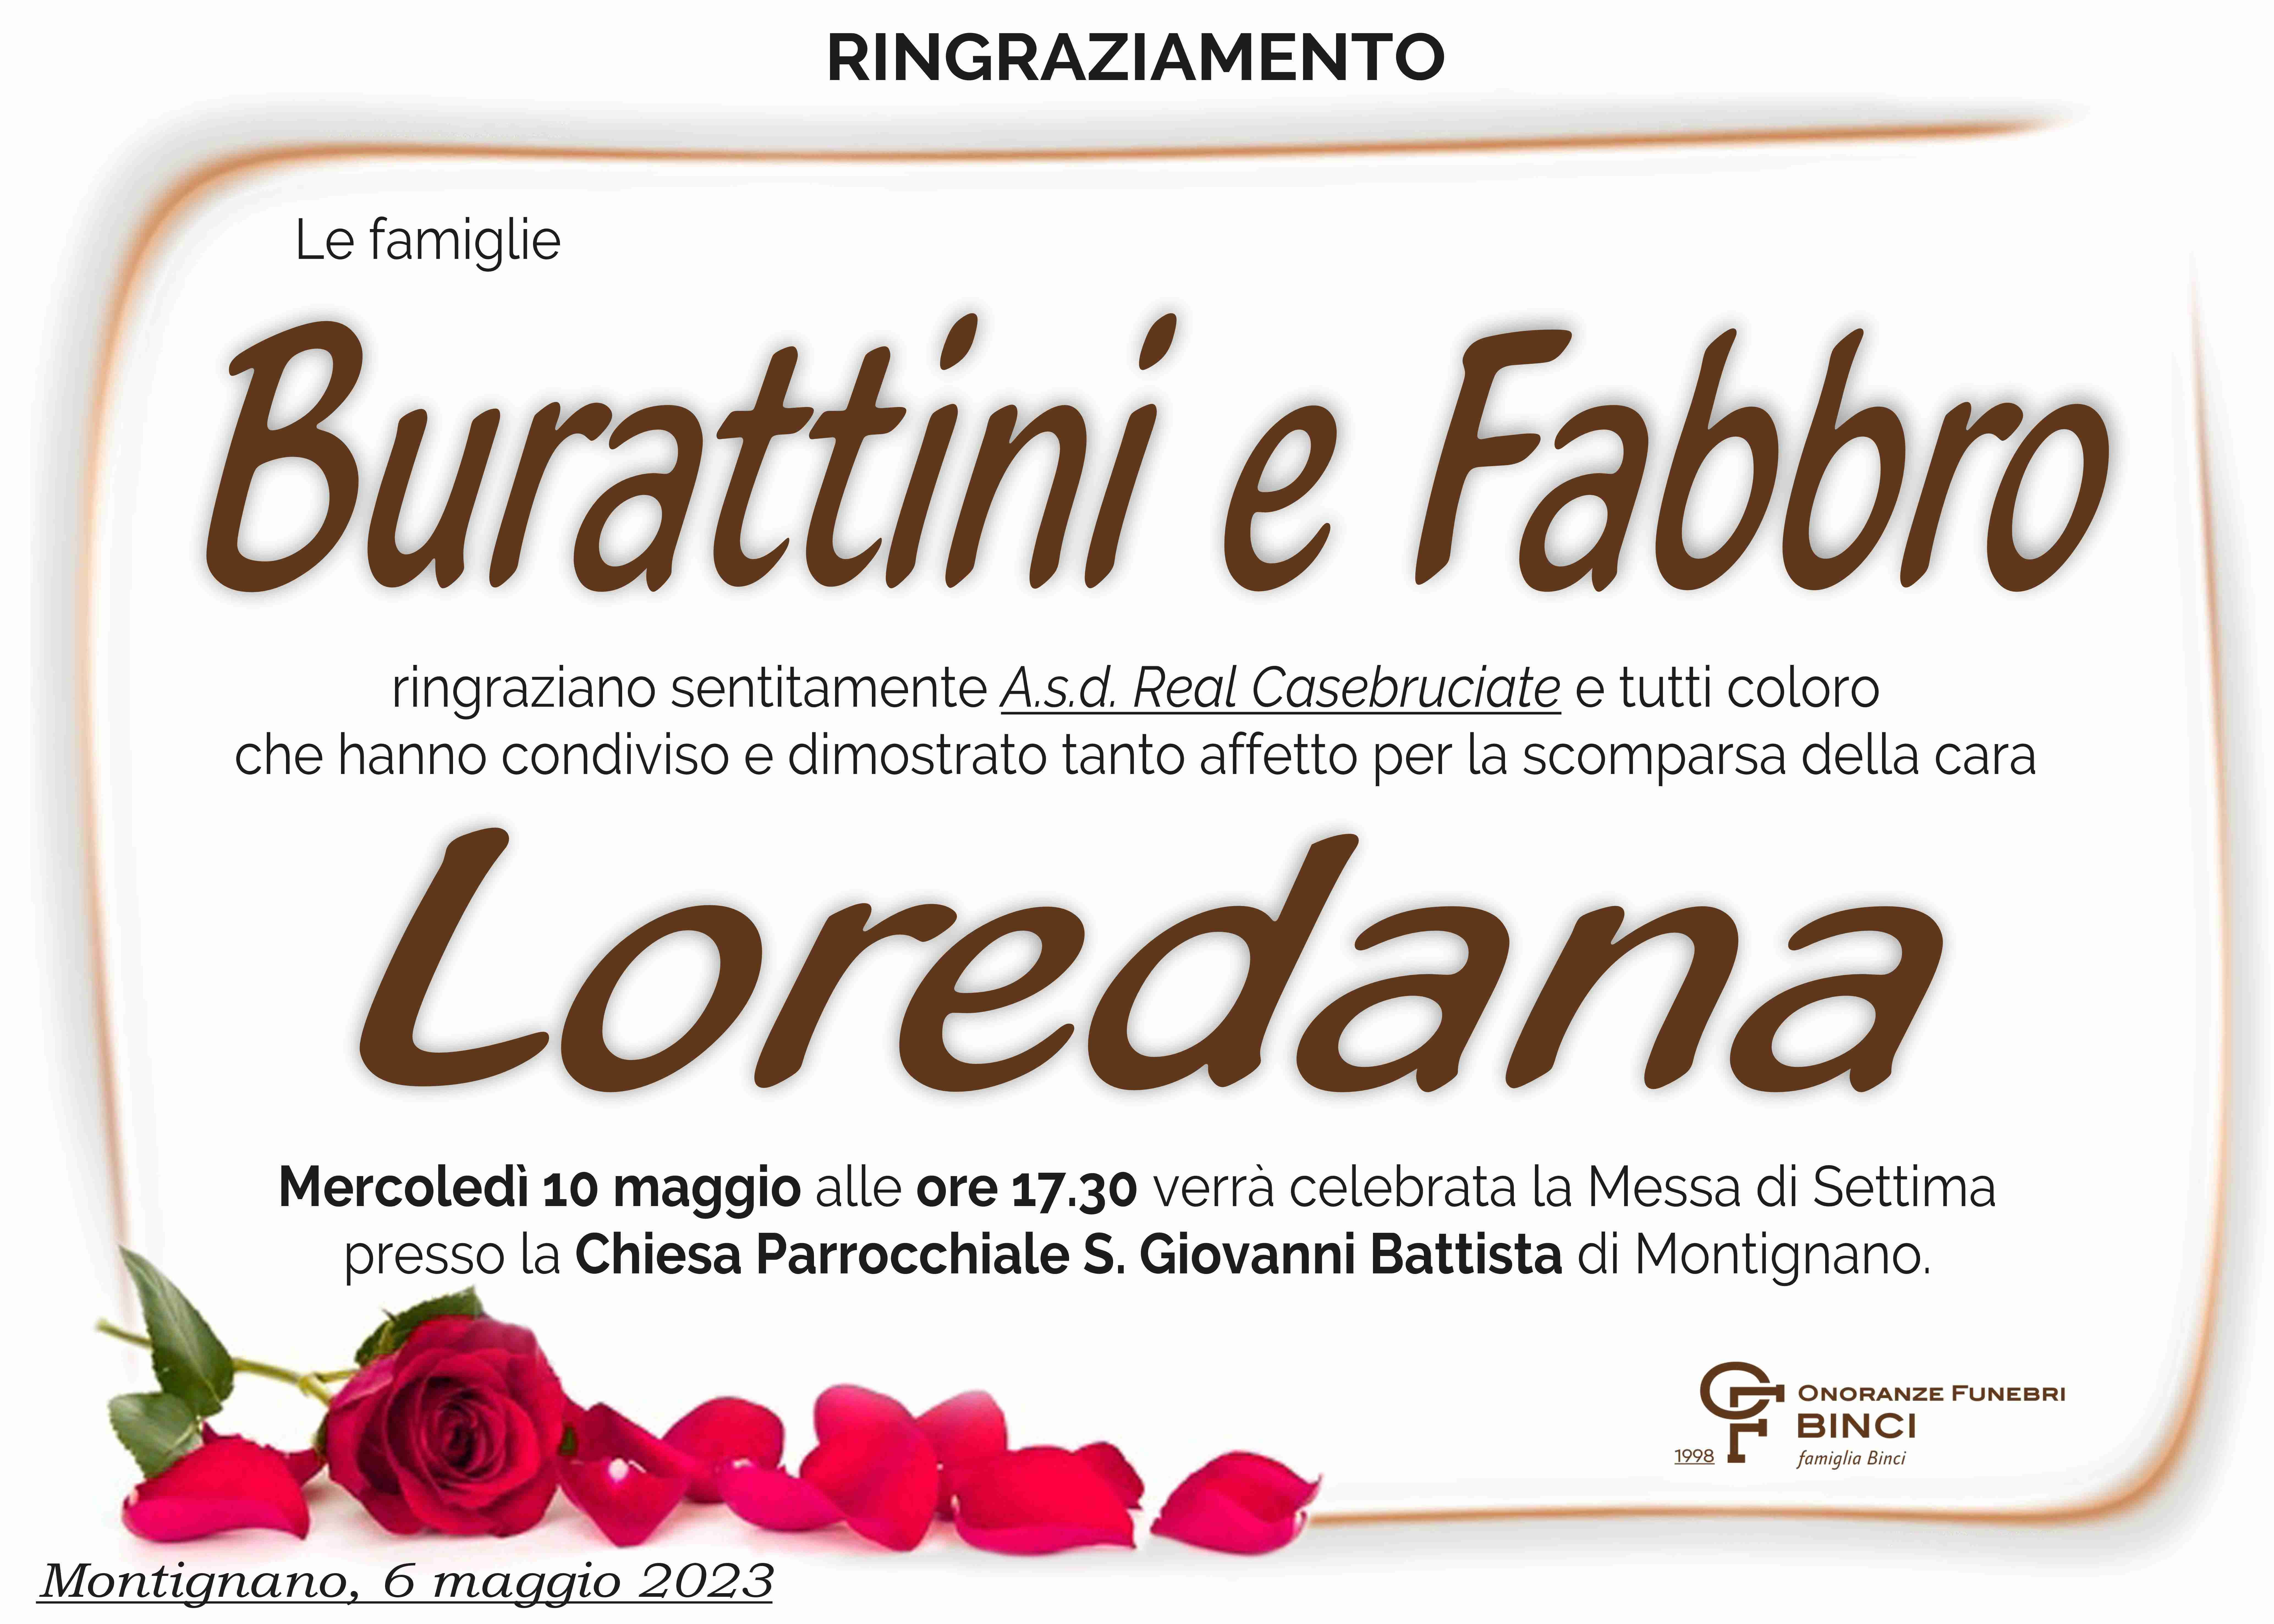 Loredana Fabbro